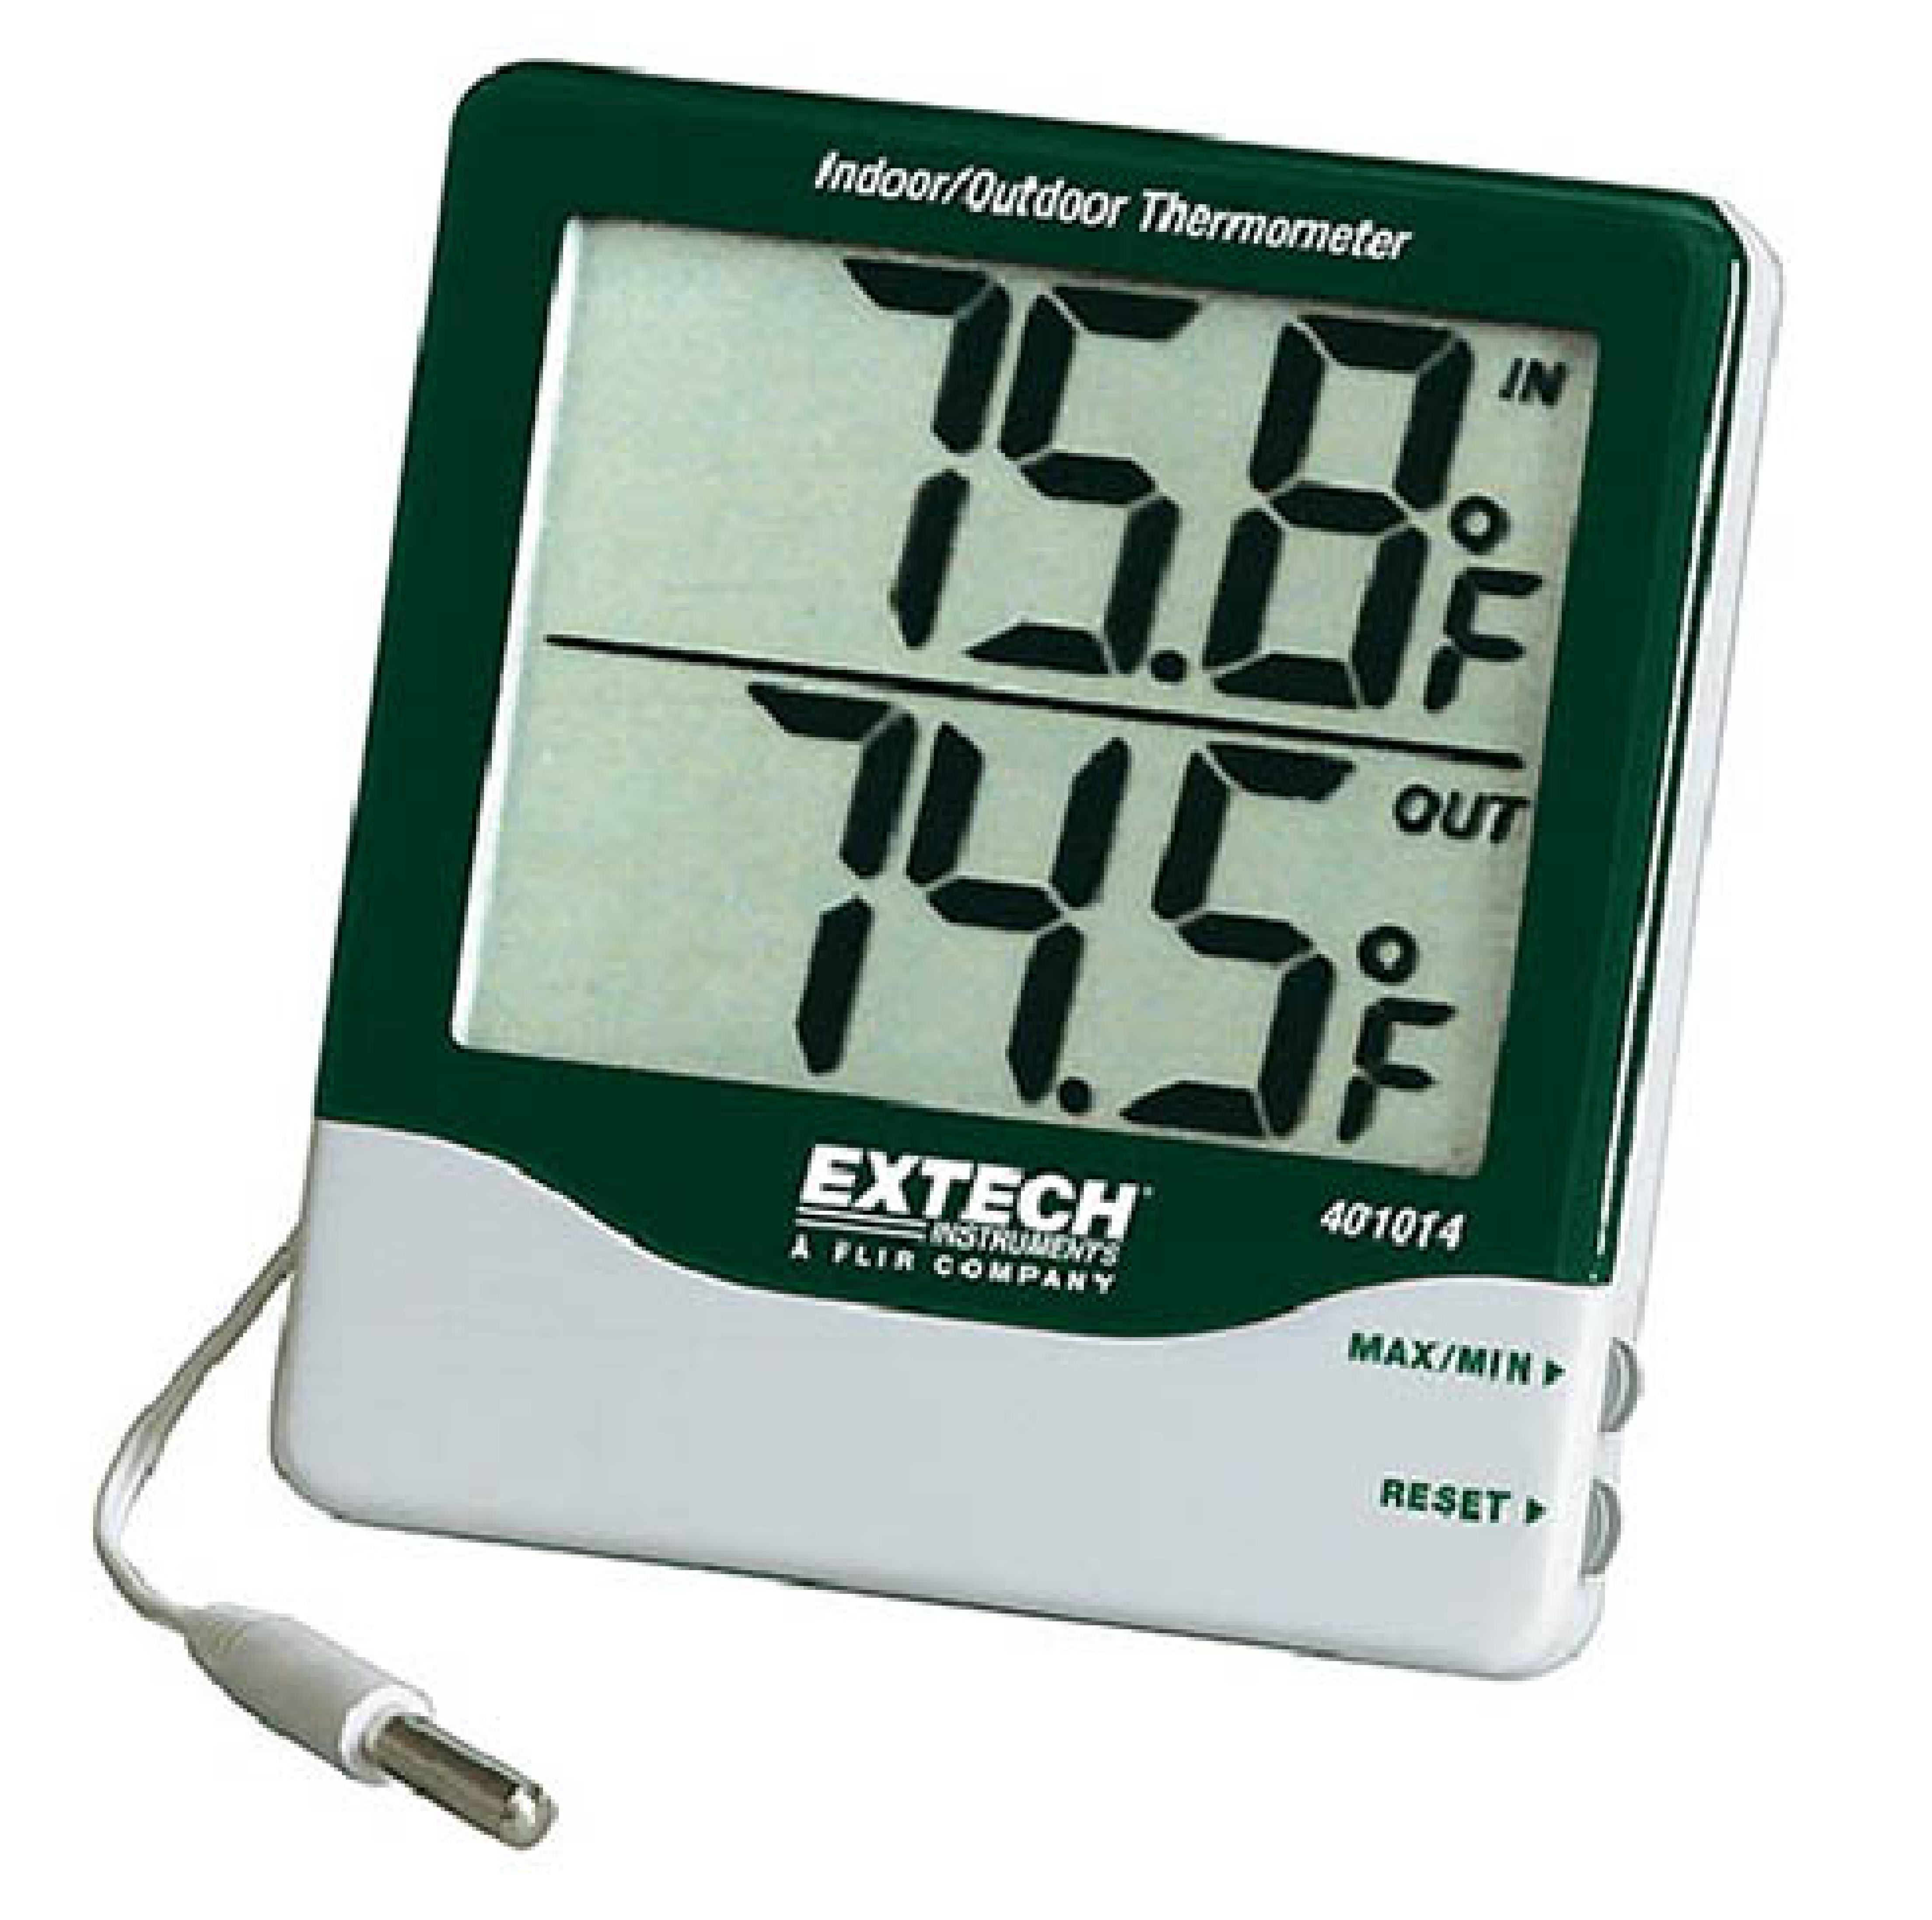 Extech 445580 Humidity/Temperature Pen